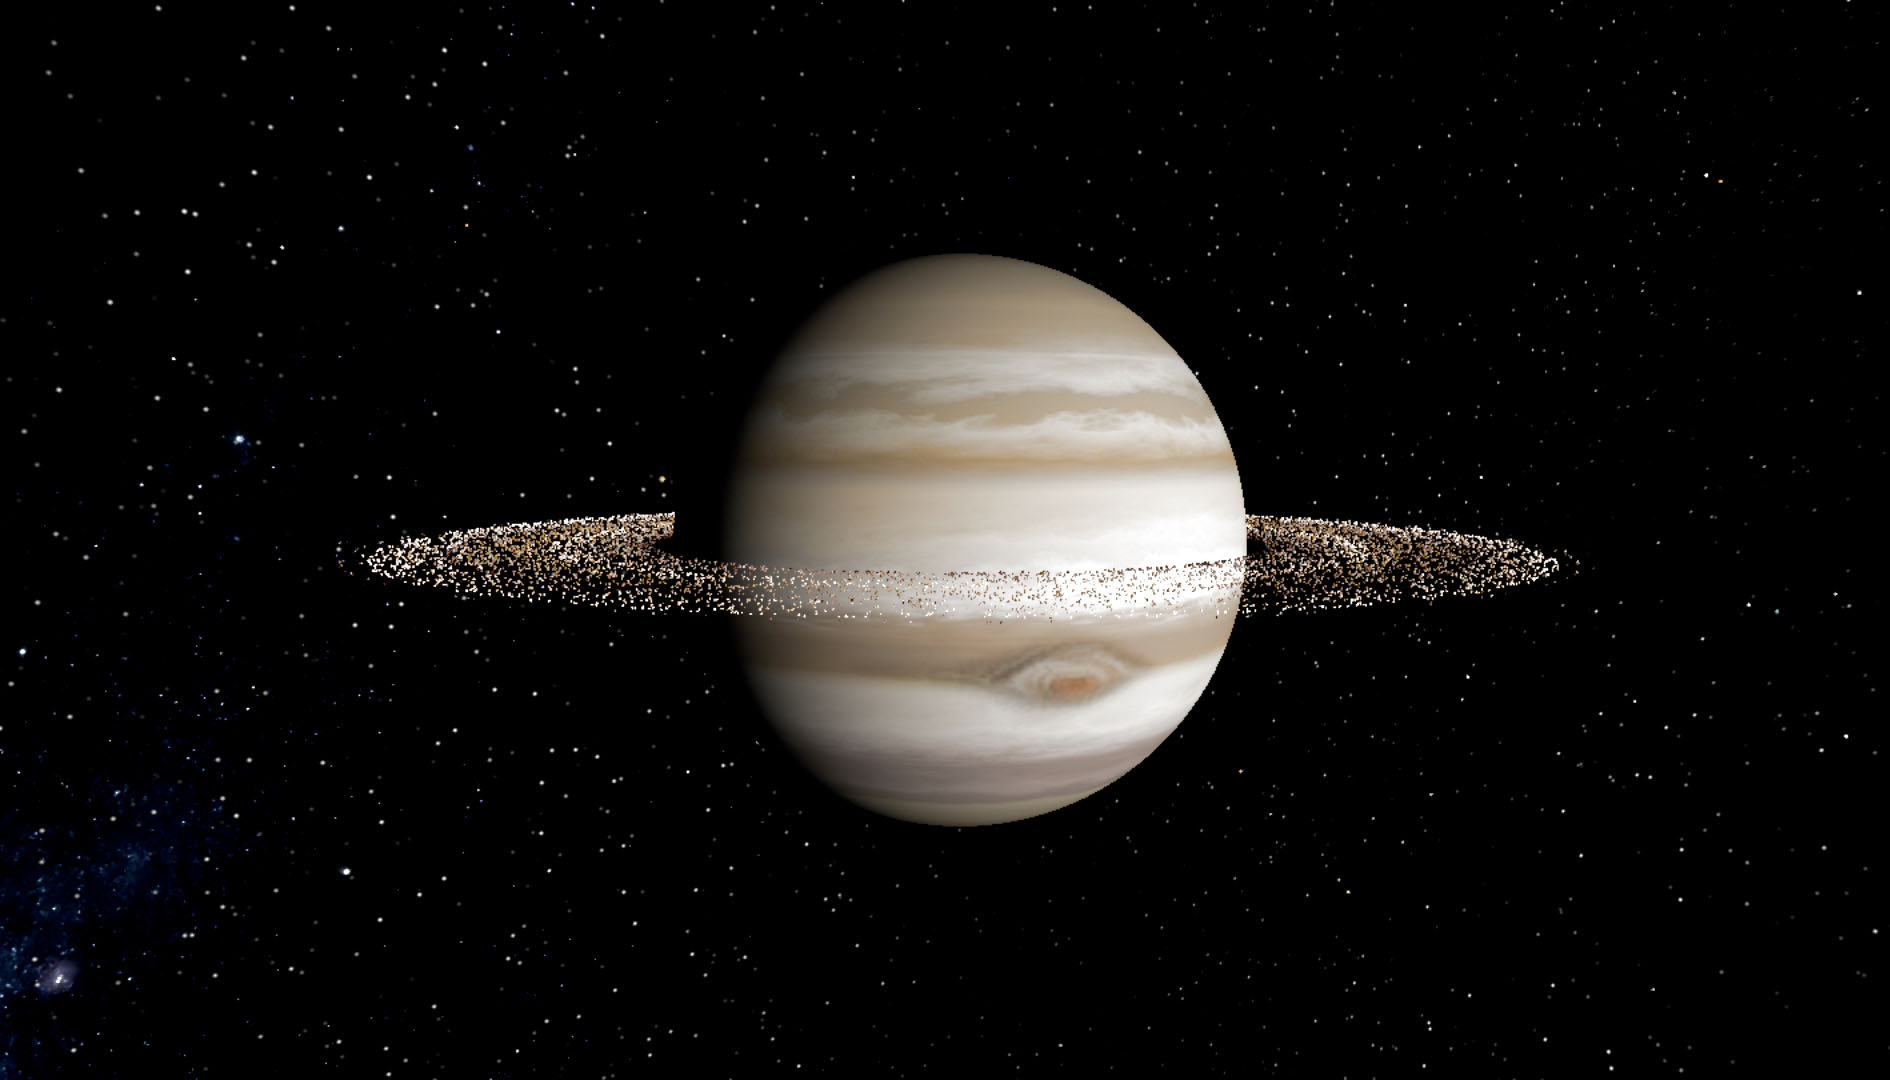 Artist rendering of Jupiter with rings